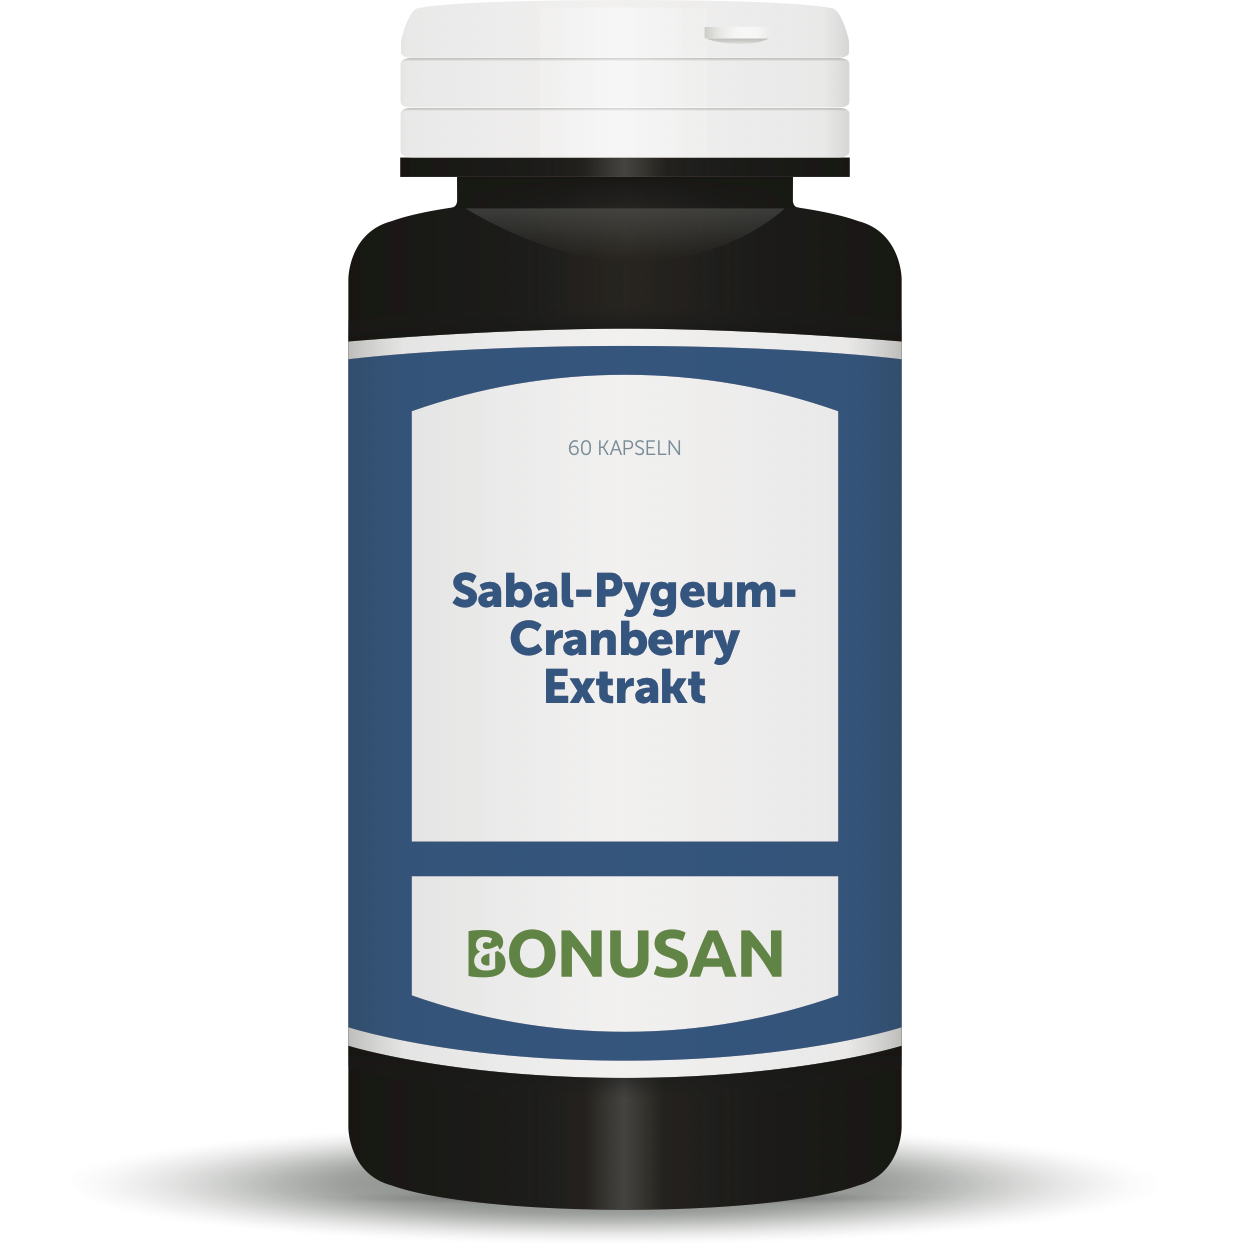 Sabal-Pygeum-Cranberry Extrakt